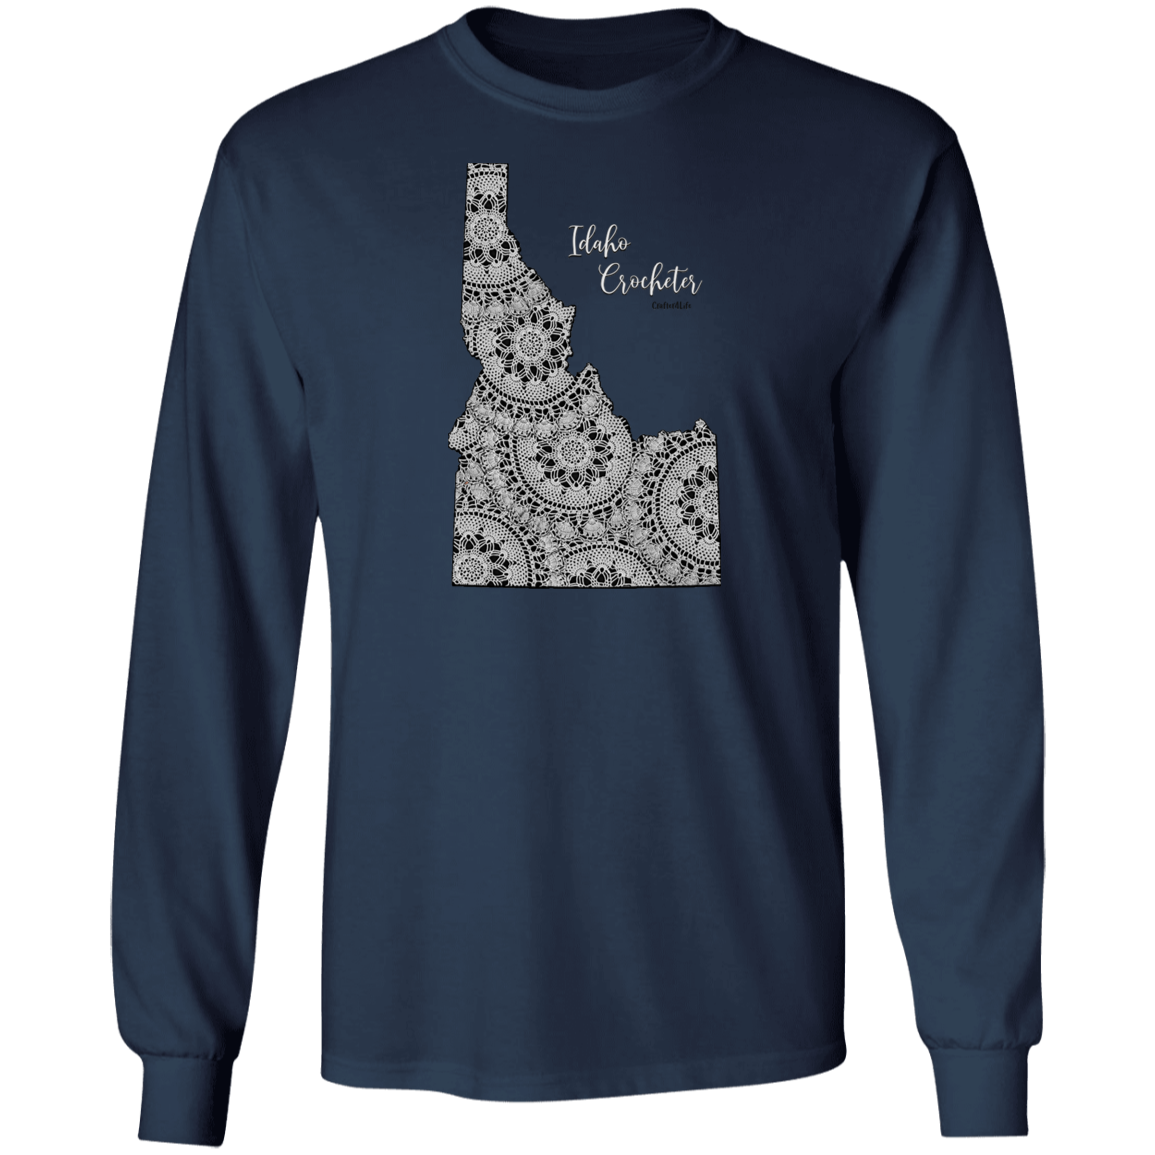 Idaho Crocheter LS Ultra Cotton T-Shirt